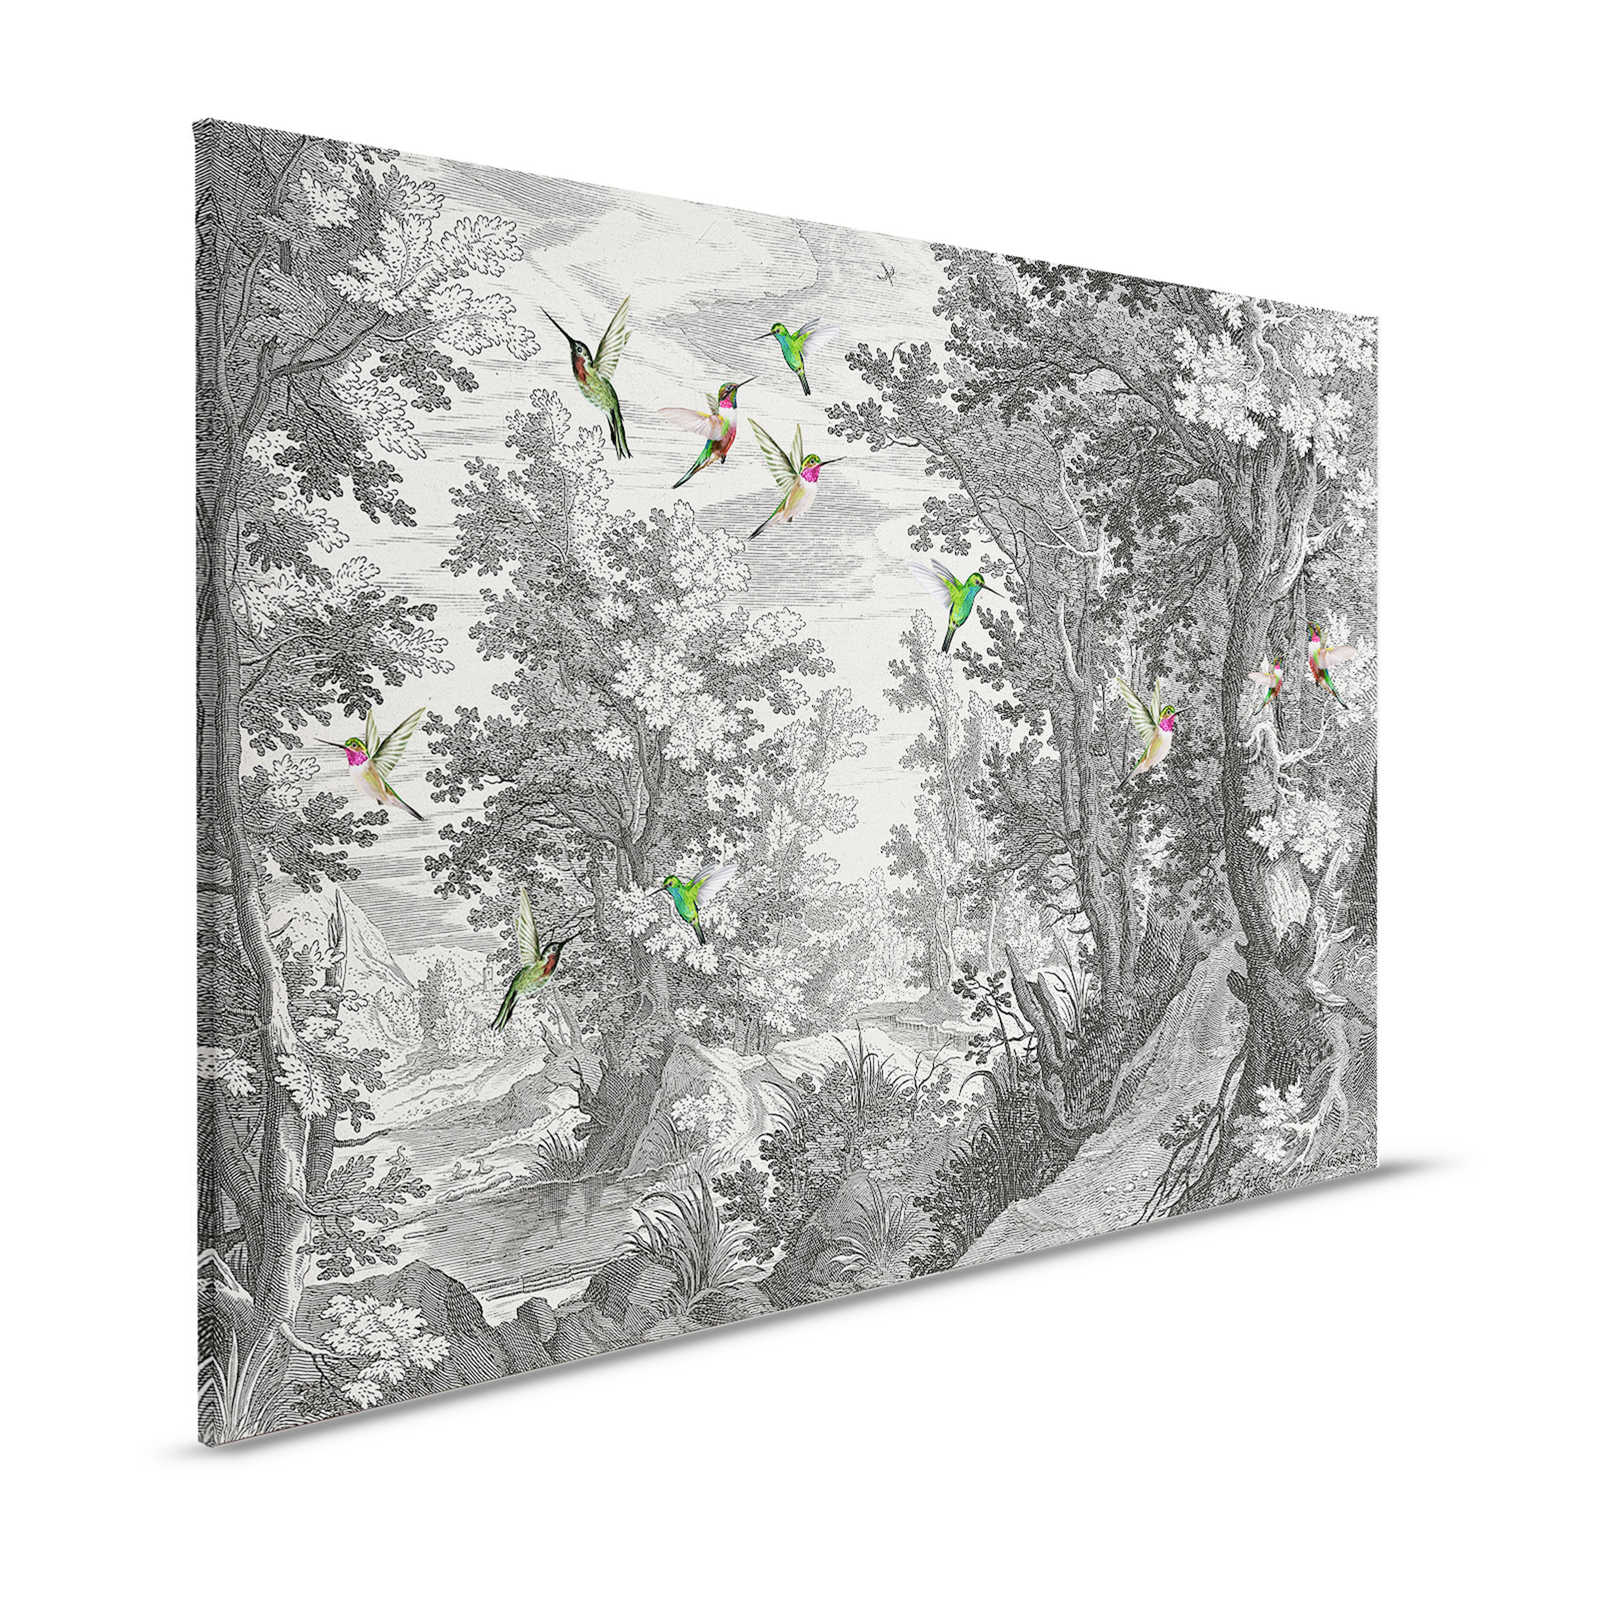 Fancy Forest 1 - Landscape Canvas Print with Birds - 1.20 m x 0.80 m
